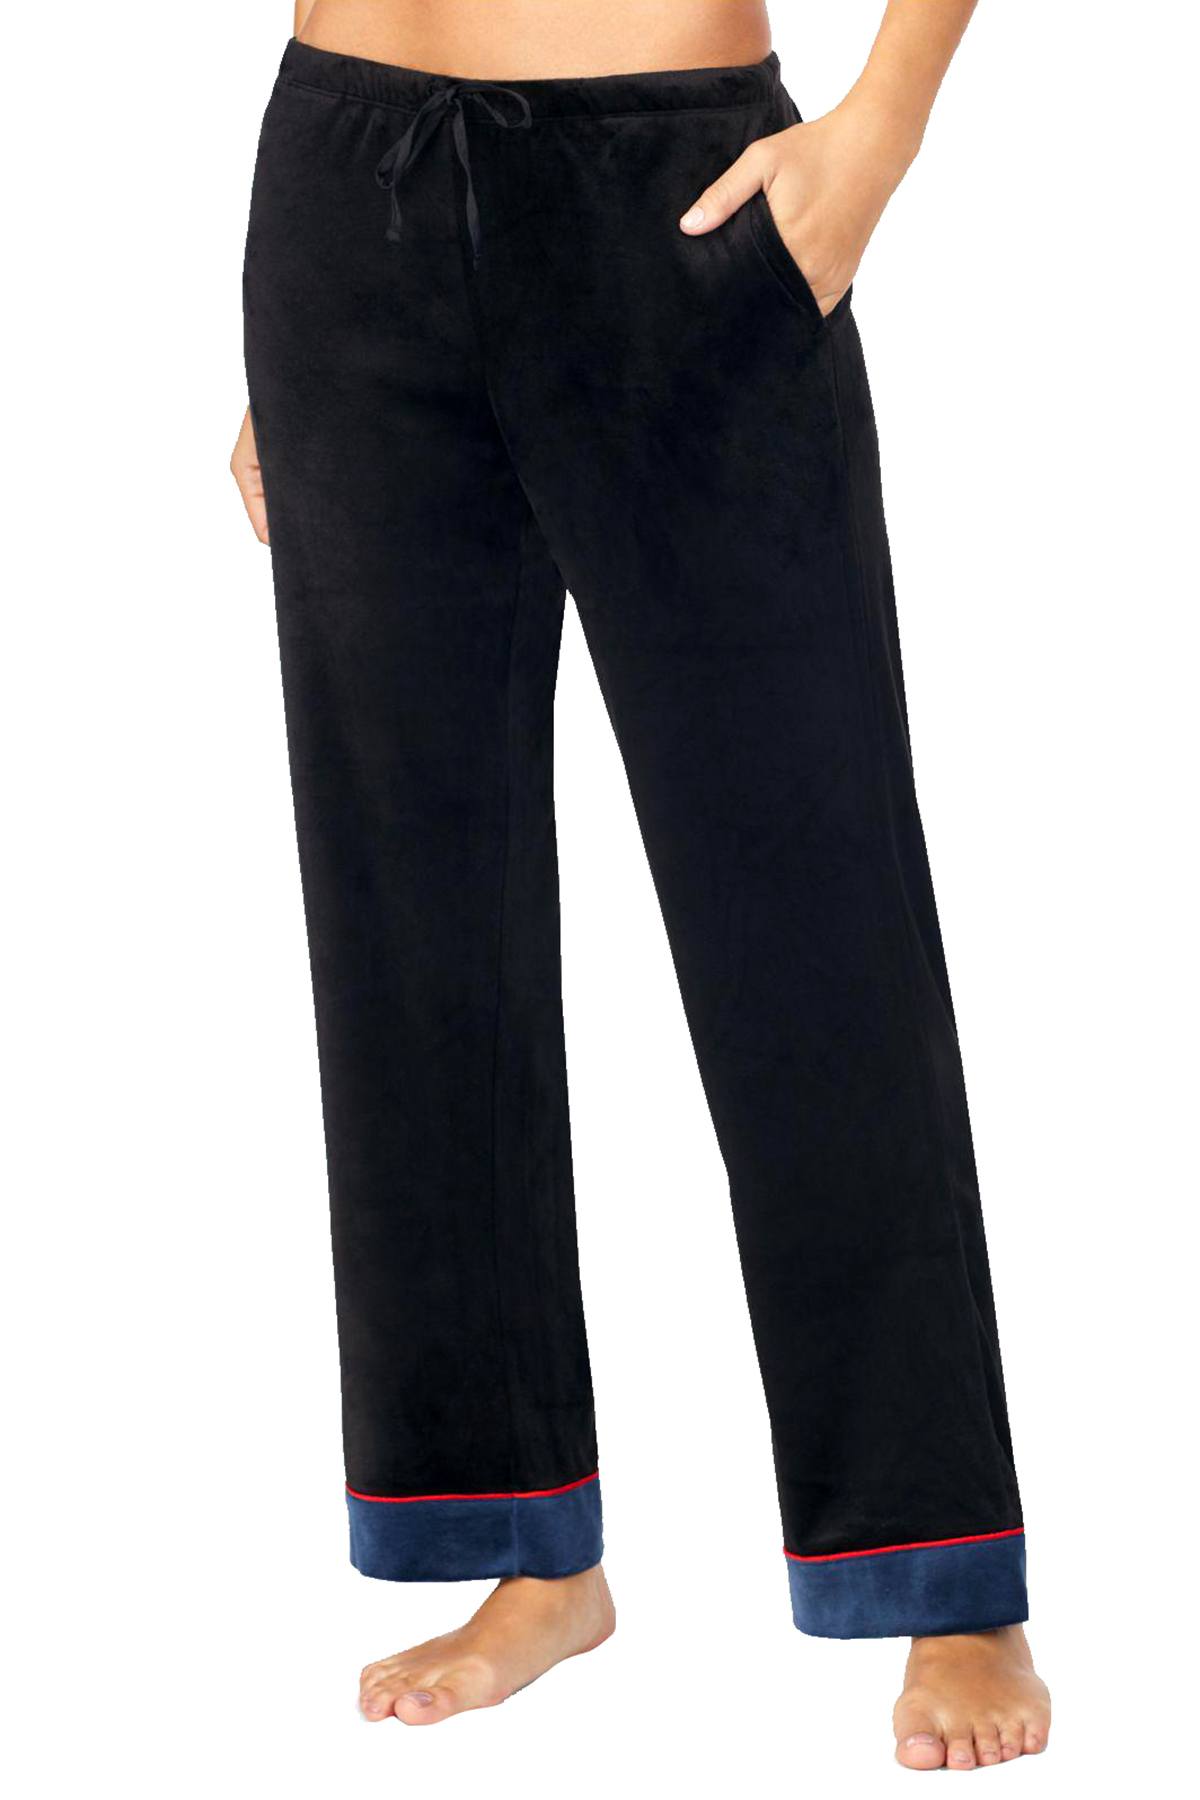 DKNY Black/Navy Velour Cuffed Pajama Pant